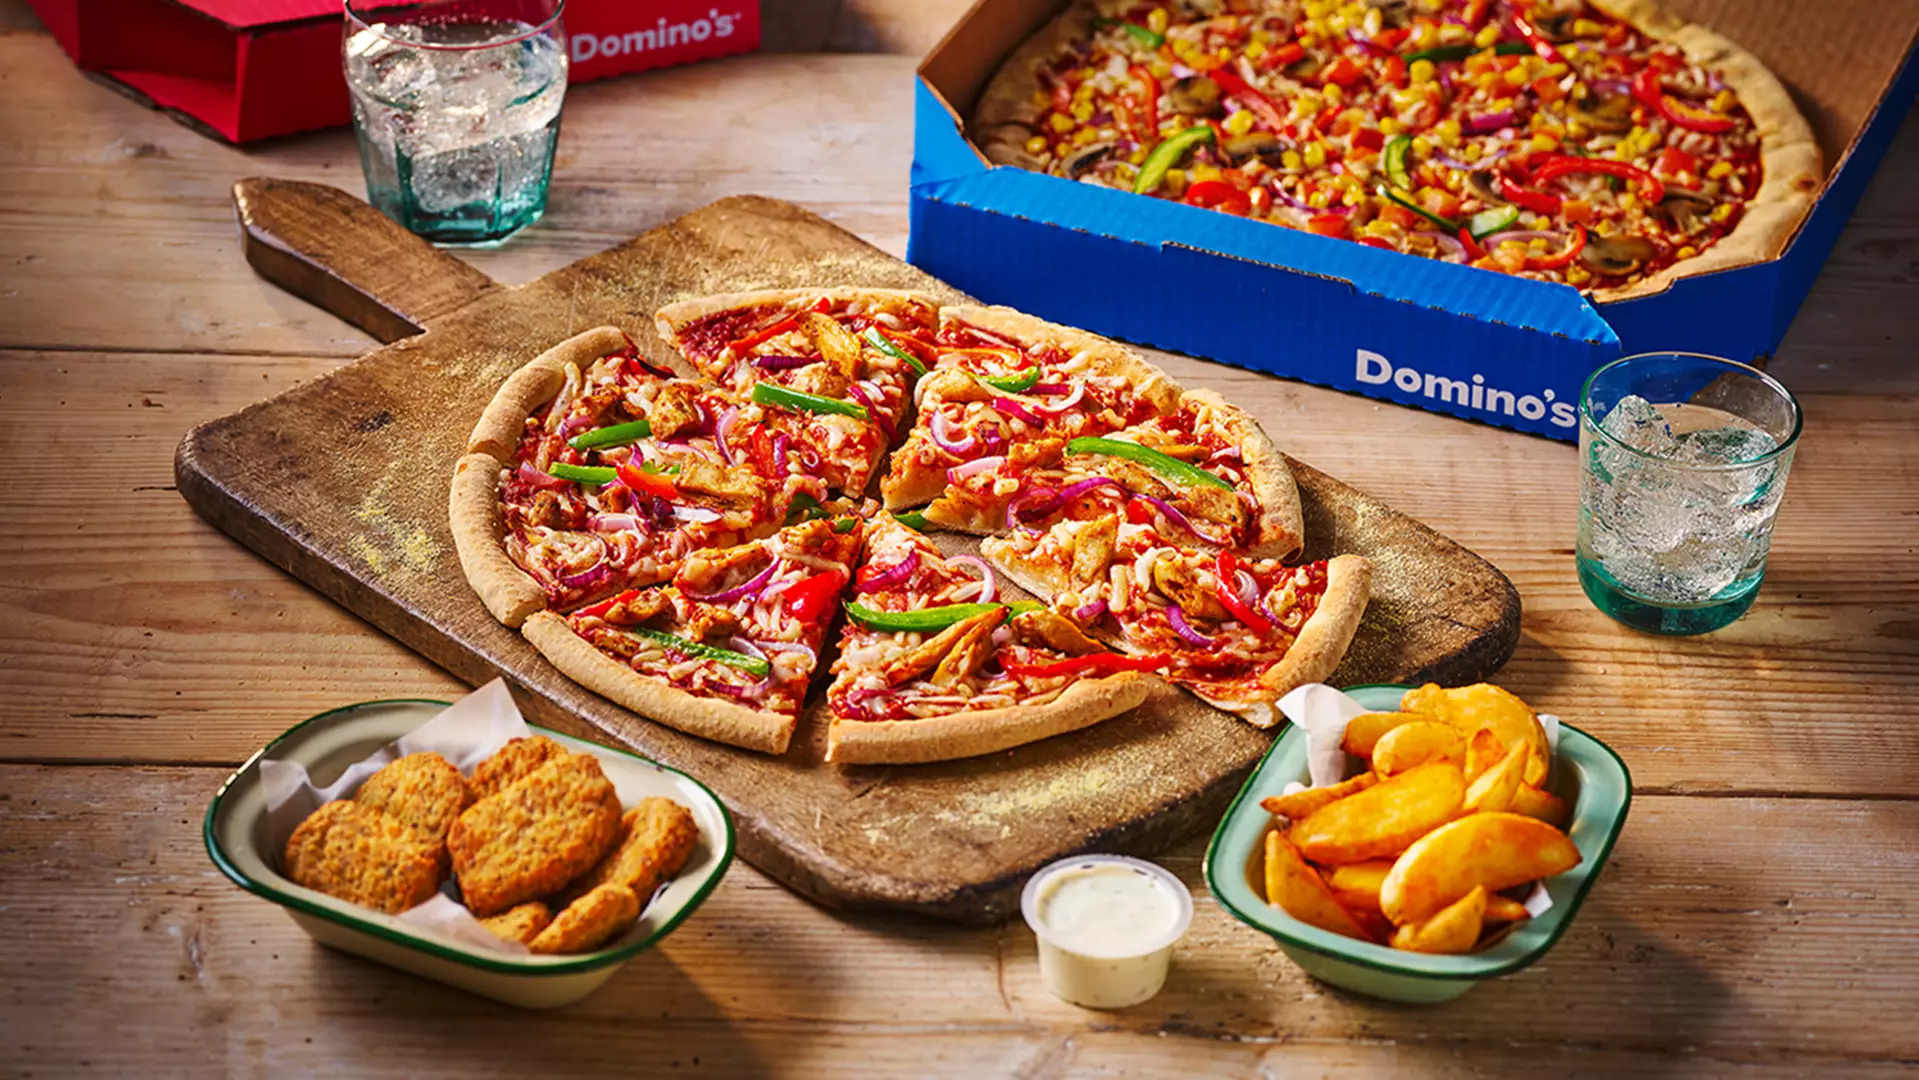 Domino's Add New Vegan Chicken Pizza And Vegan Nuggets To Menu